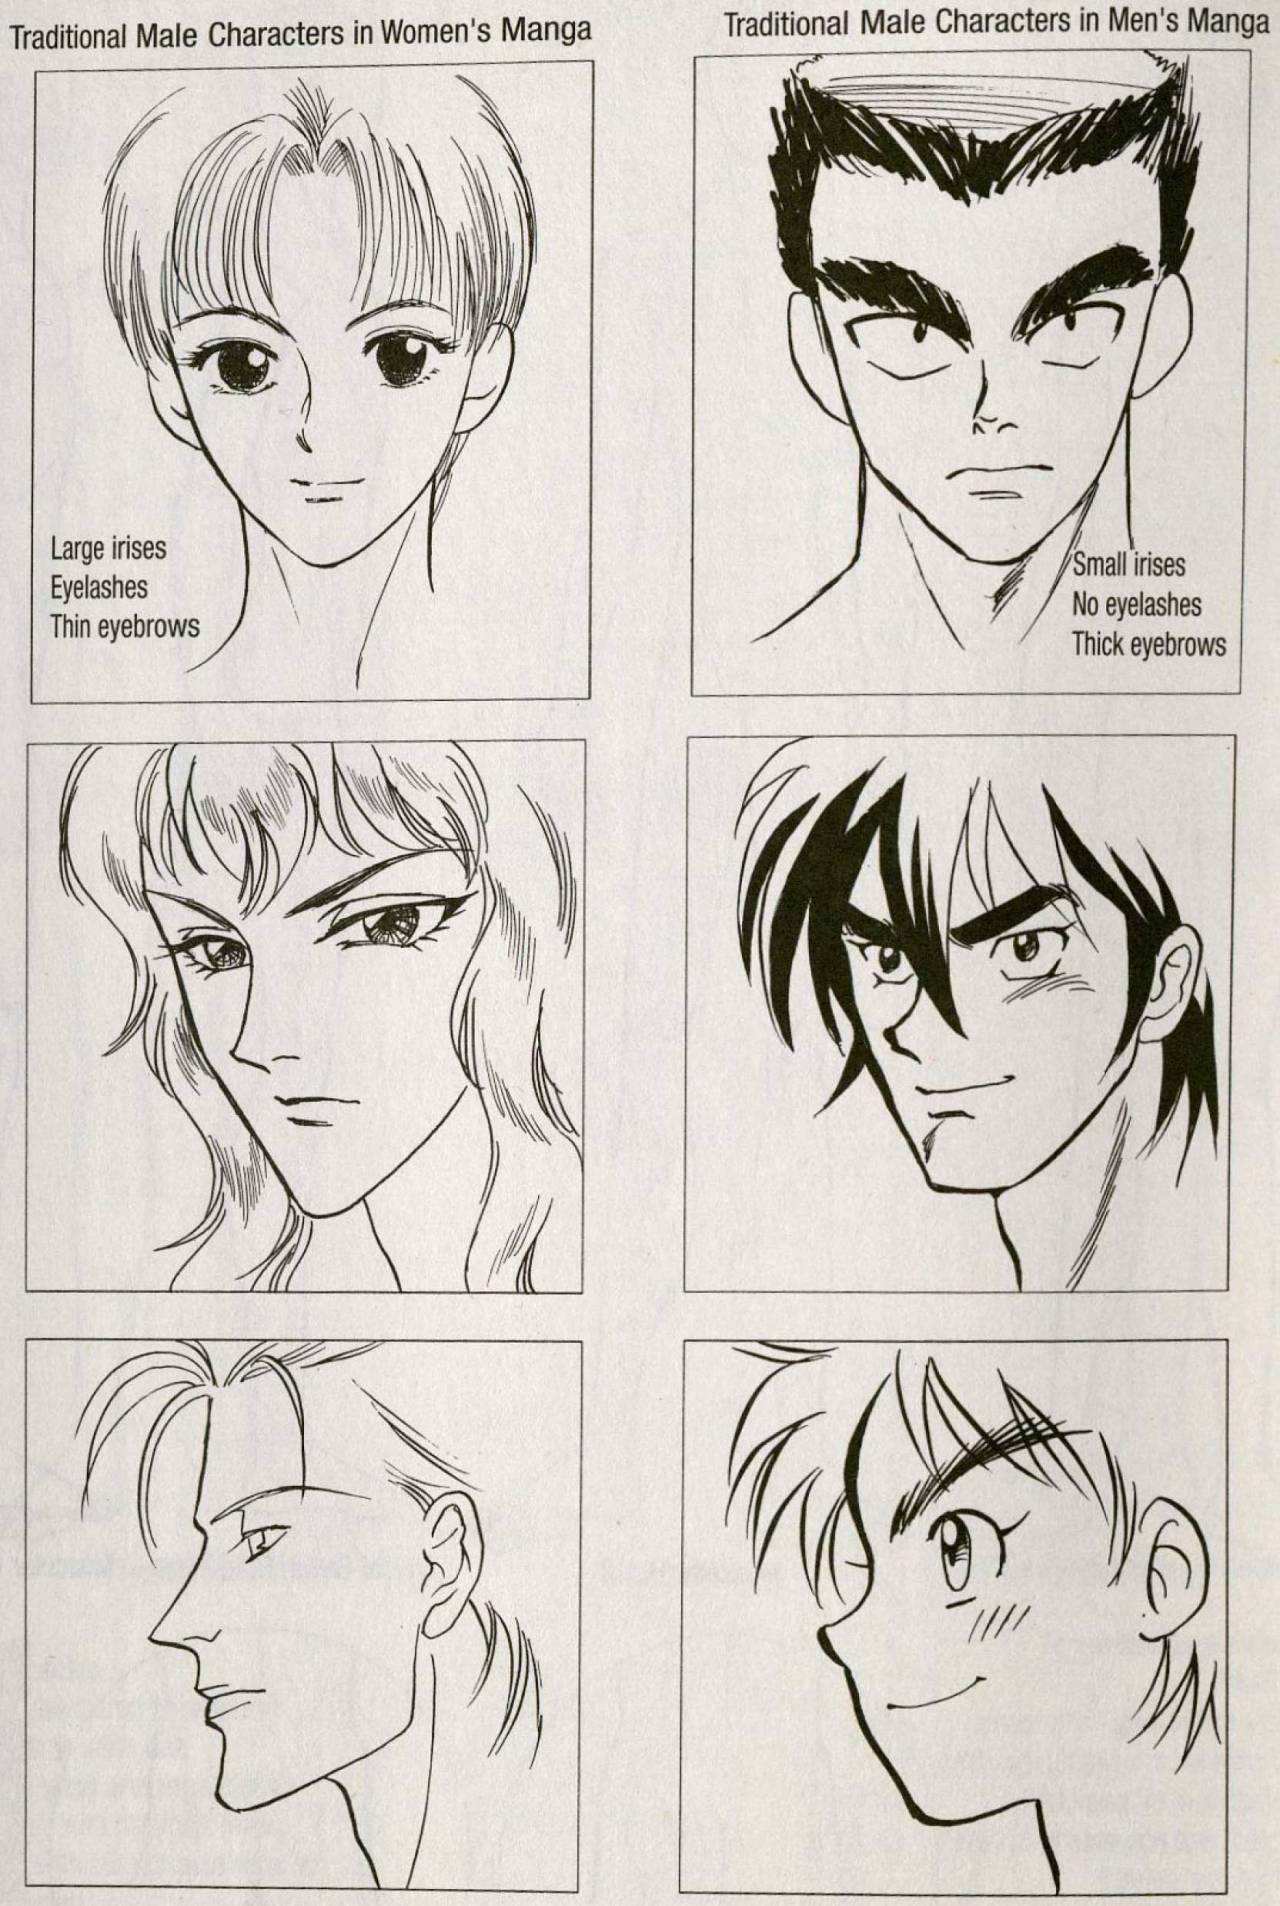 Hayashi Hikaru, How to Draw Manga: Male Characters, p. 18.